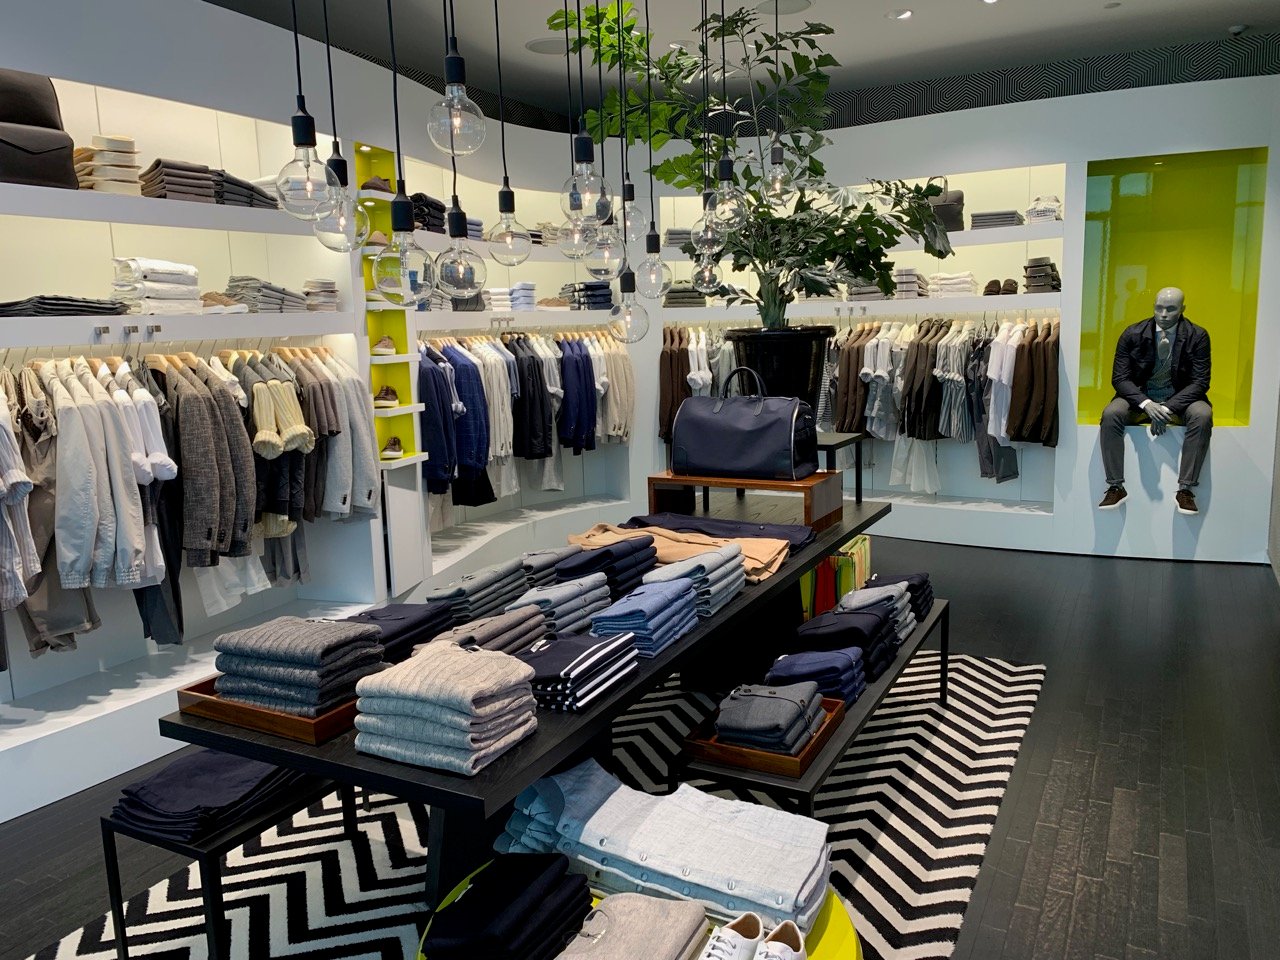 Boutique Store Design & Fashion Shop Interior Design, Retail Store Layout  Design and Planning Supply